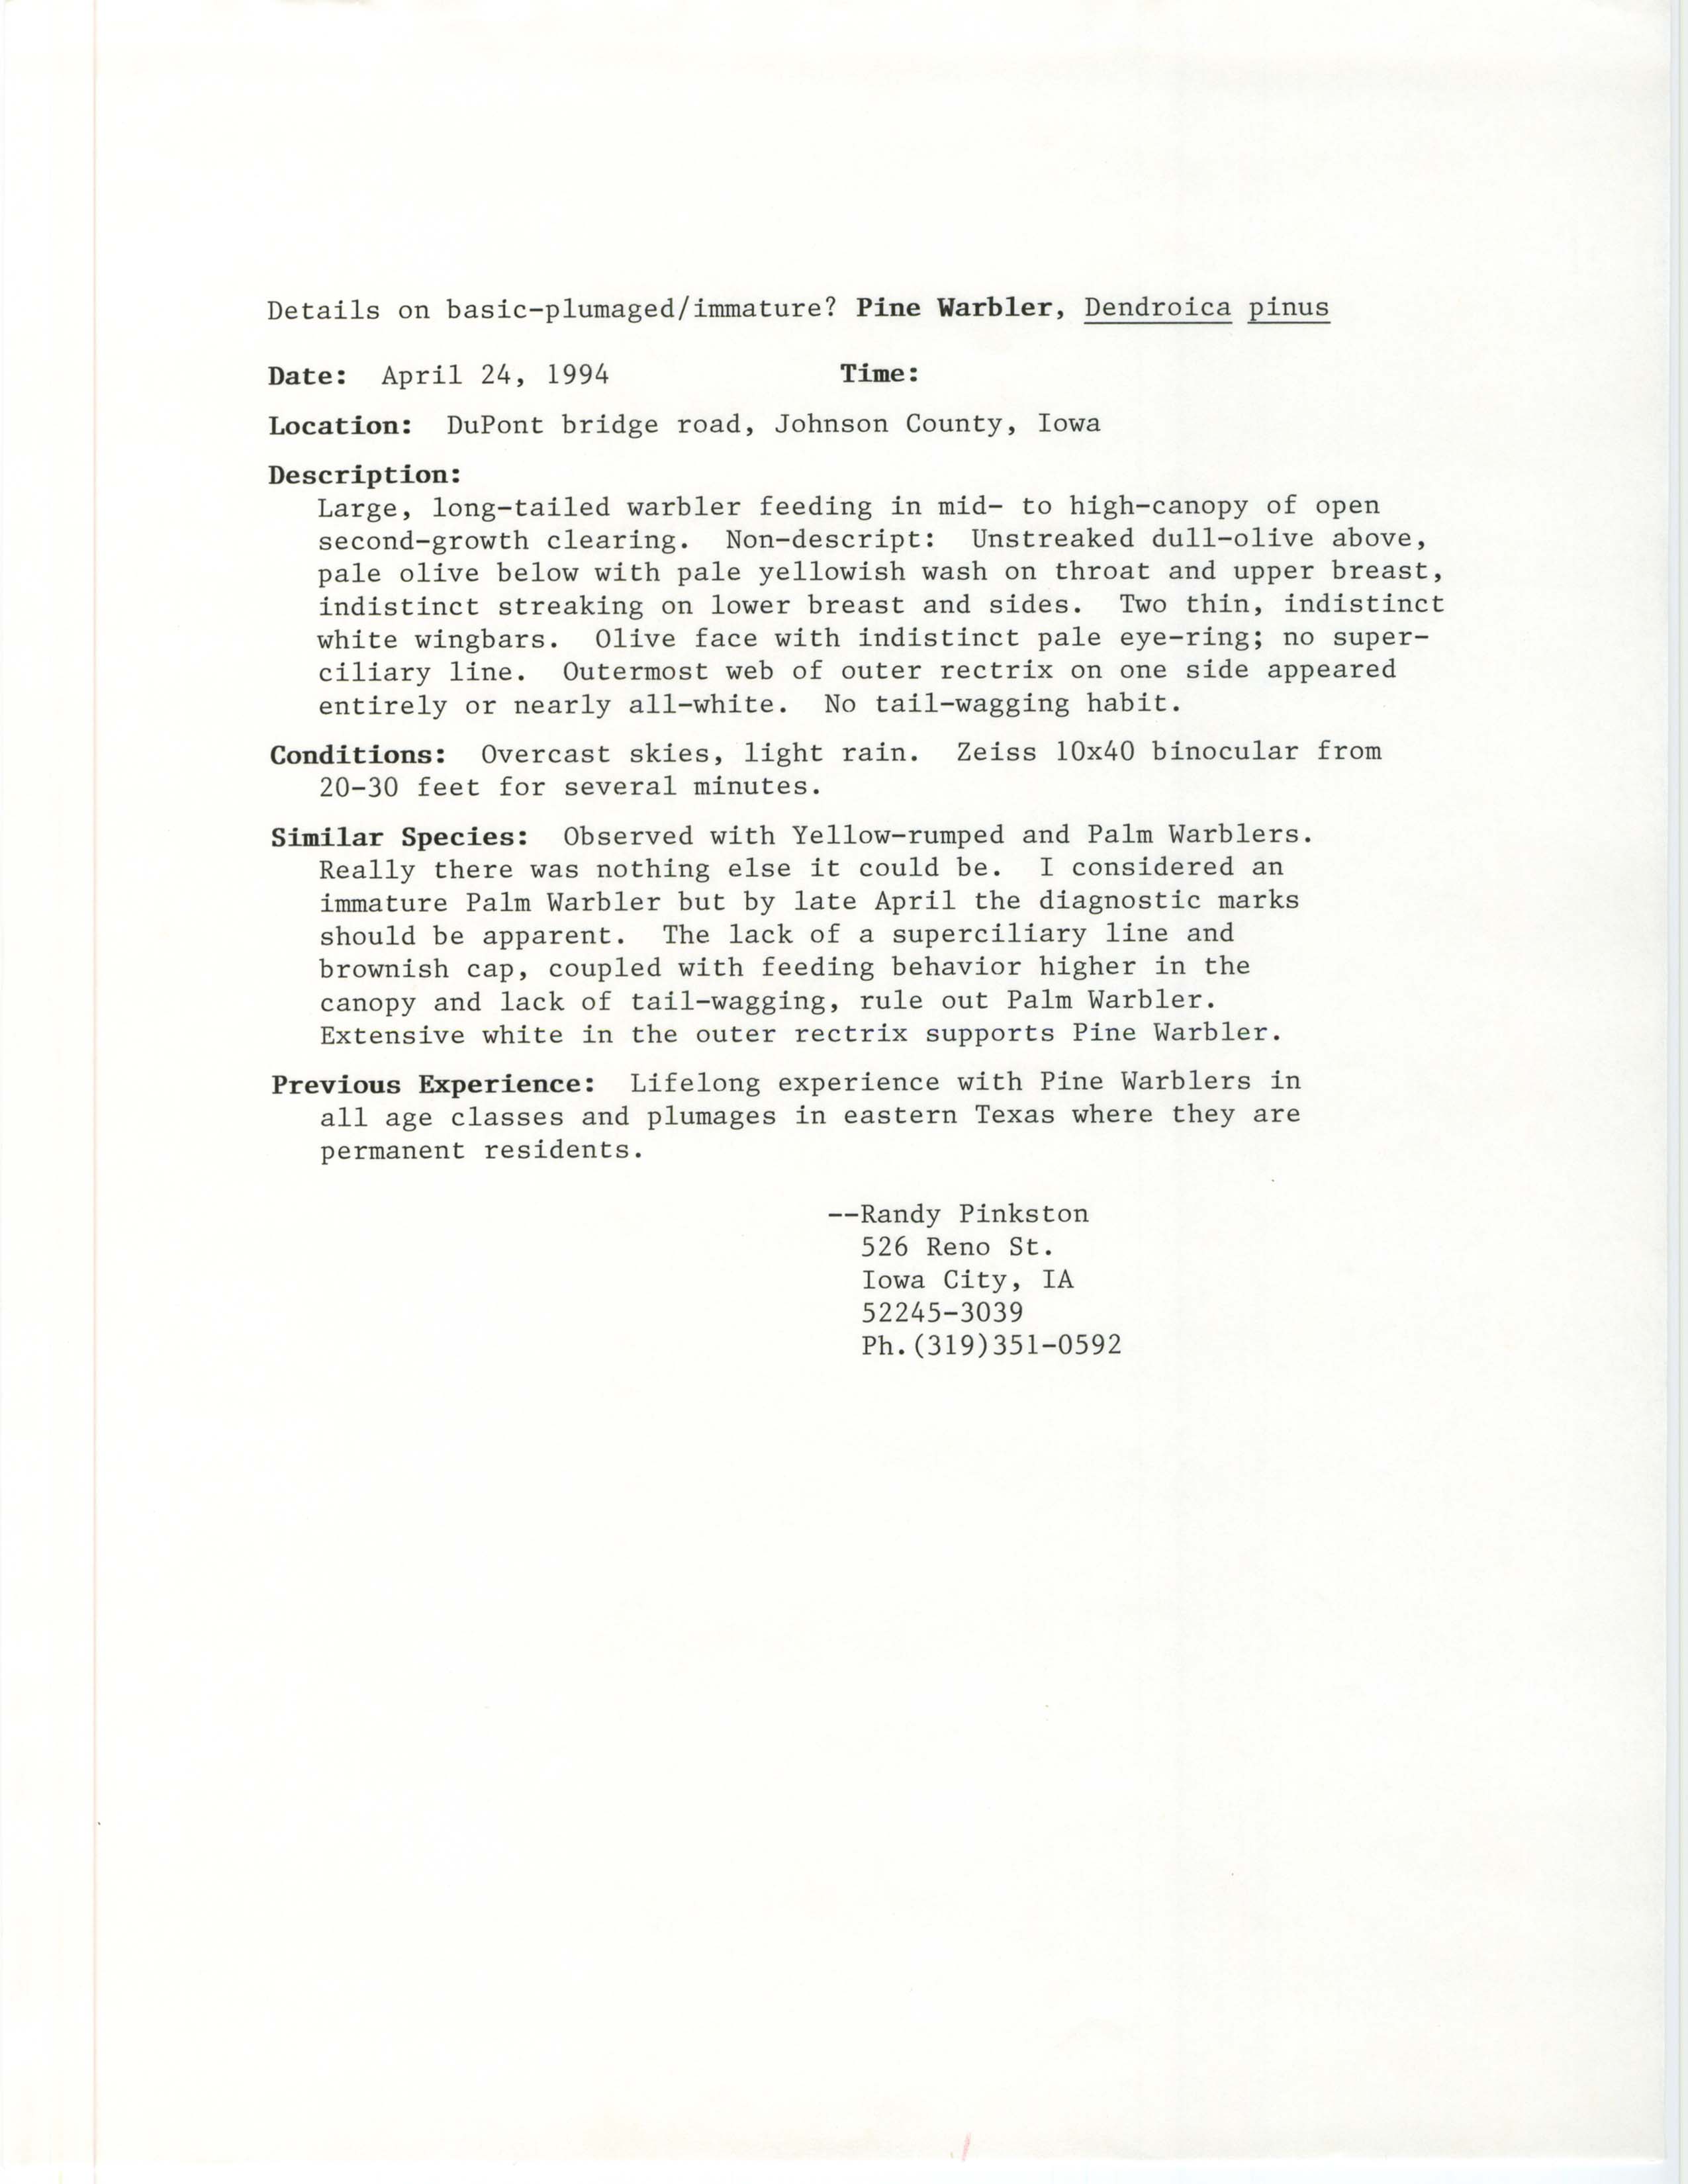 Rare bird documentation form for Pine Warbler at Hawkeye Wildlife Management Area, 1994